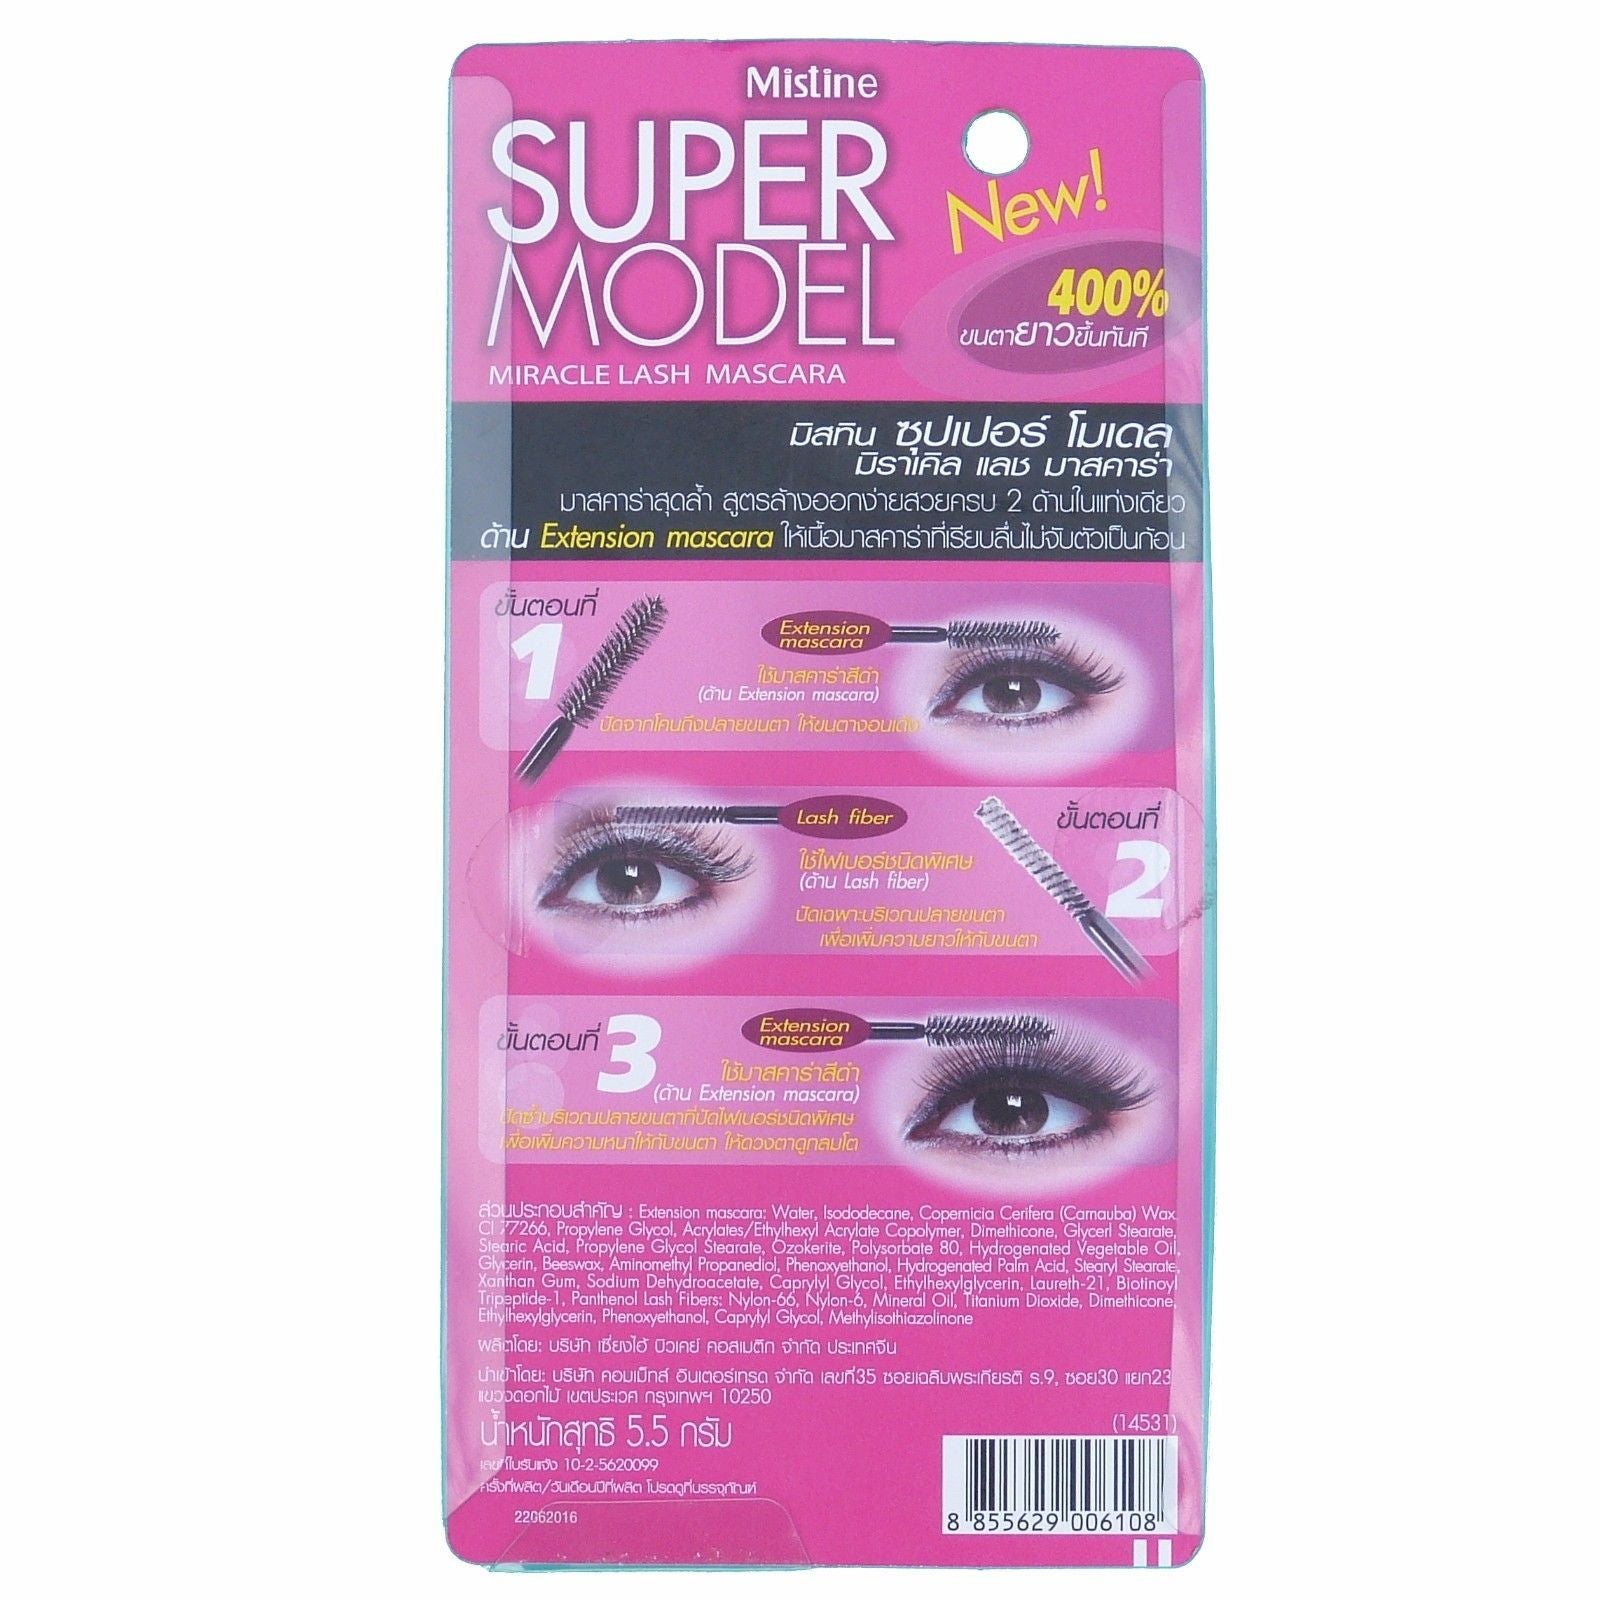 Mistine Super Model Miracle Lash Mascara - Asian Beauty Supply